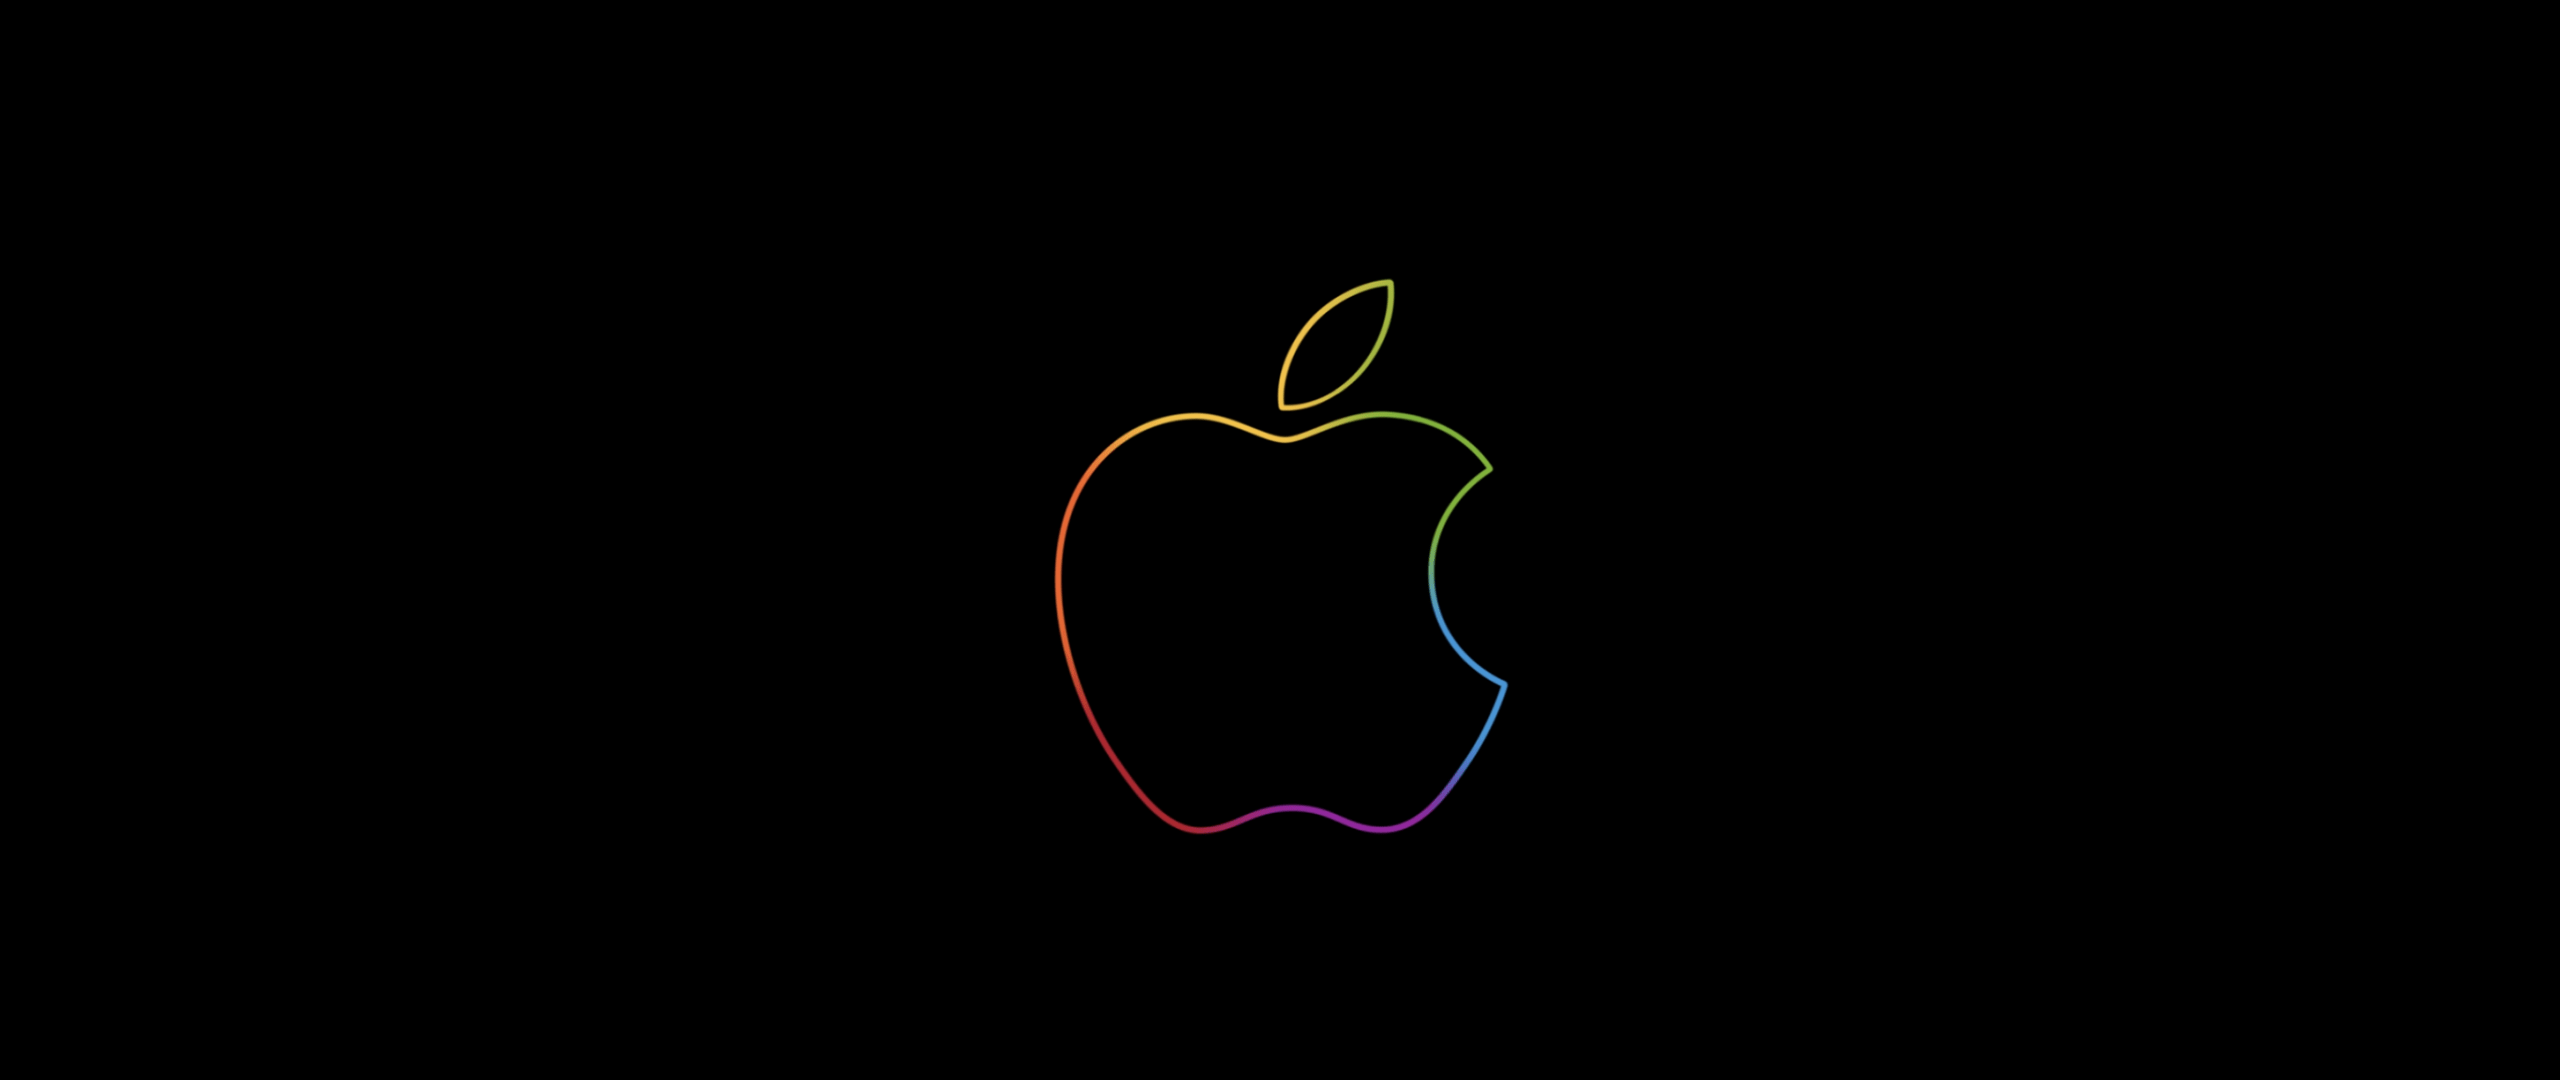 Apple Mac Logo Wallpapers - Top Free Apple Mac Logo Backgrounds ...